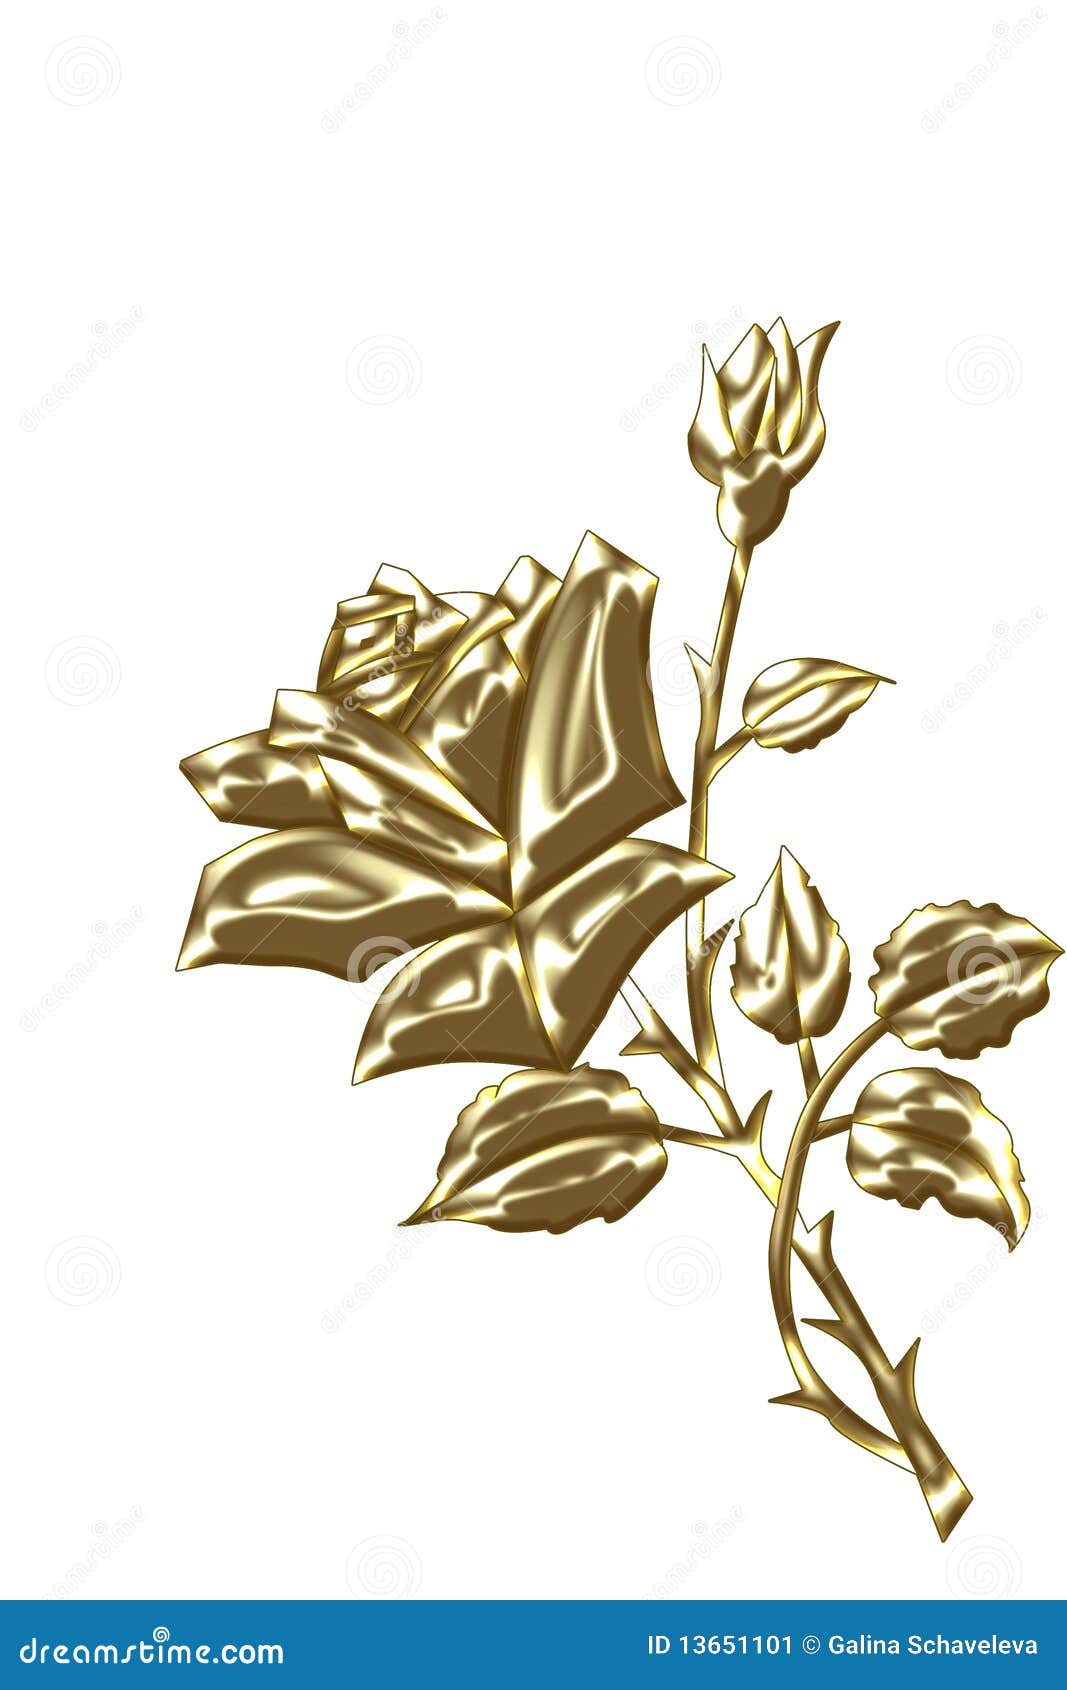 Gold rose stock illustration. Illustration of rose, garden - 13651101